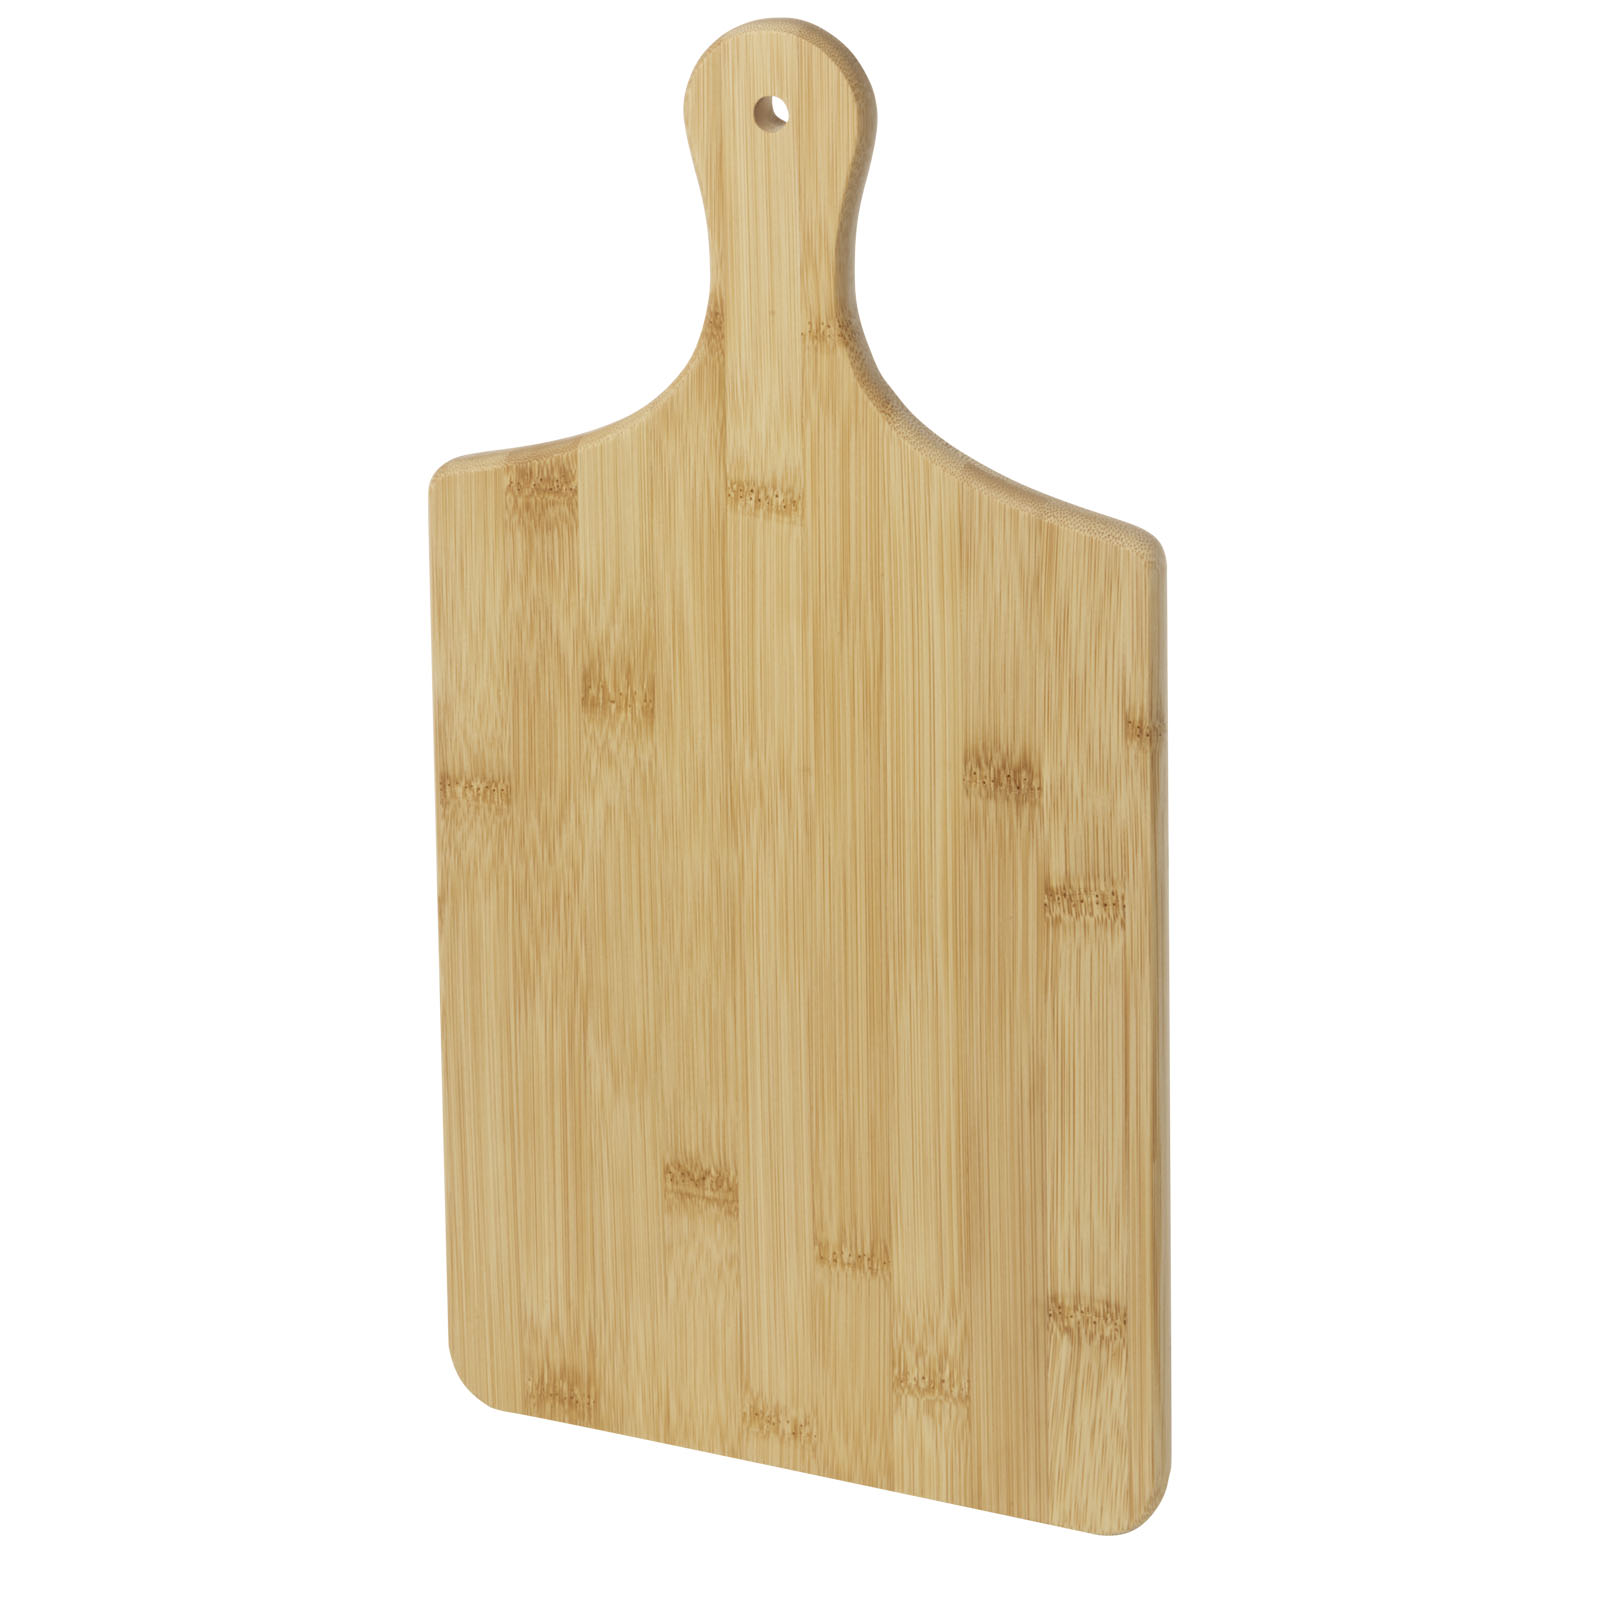 Advertising Cutting Boards - Baron bamboo cutting board - 4